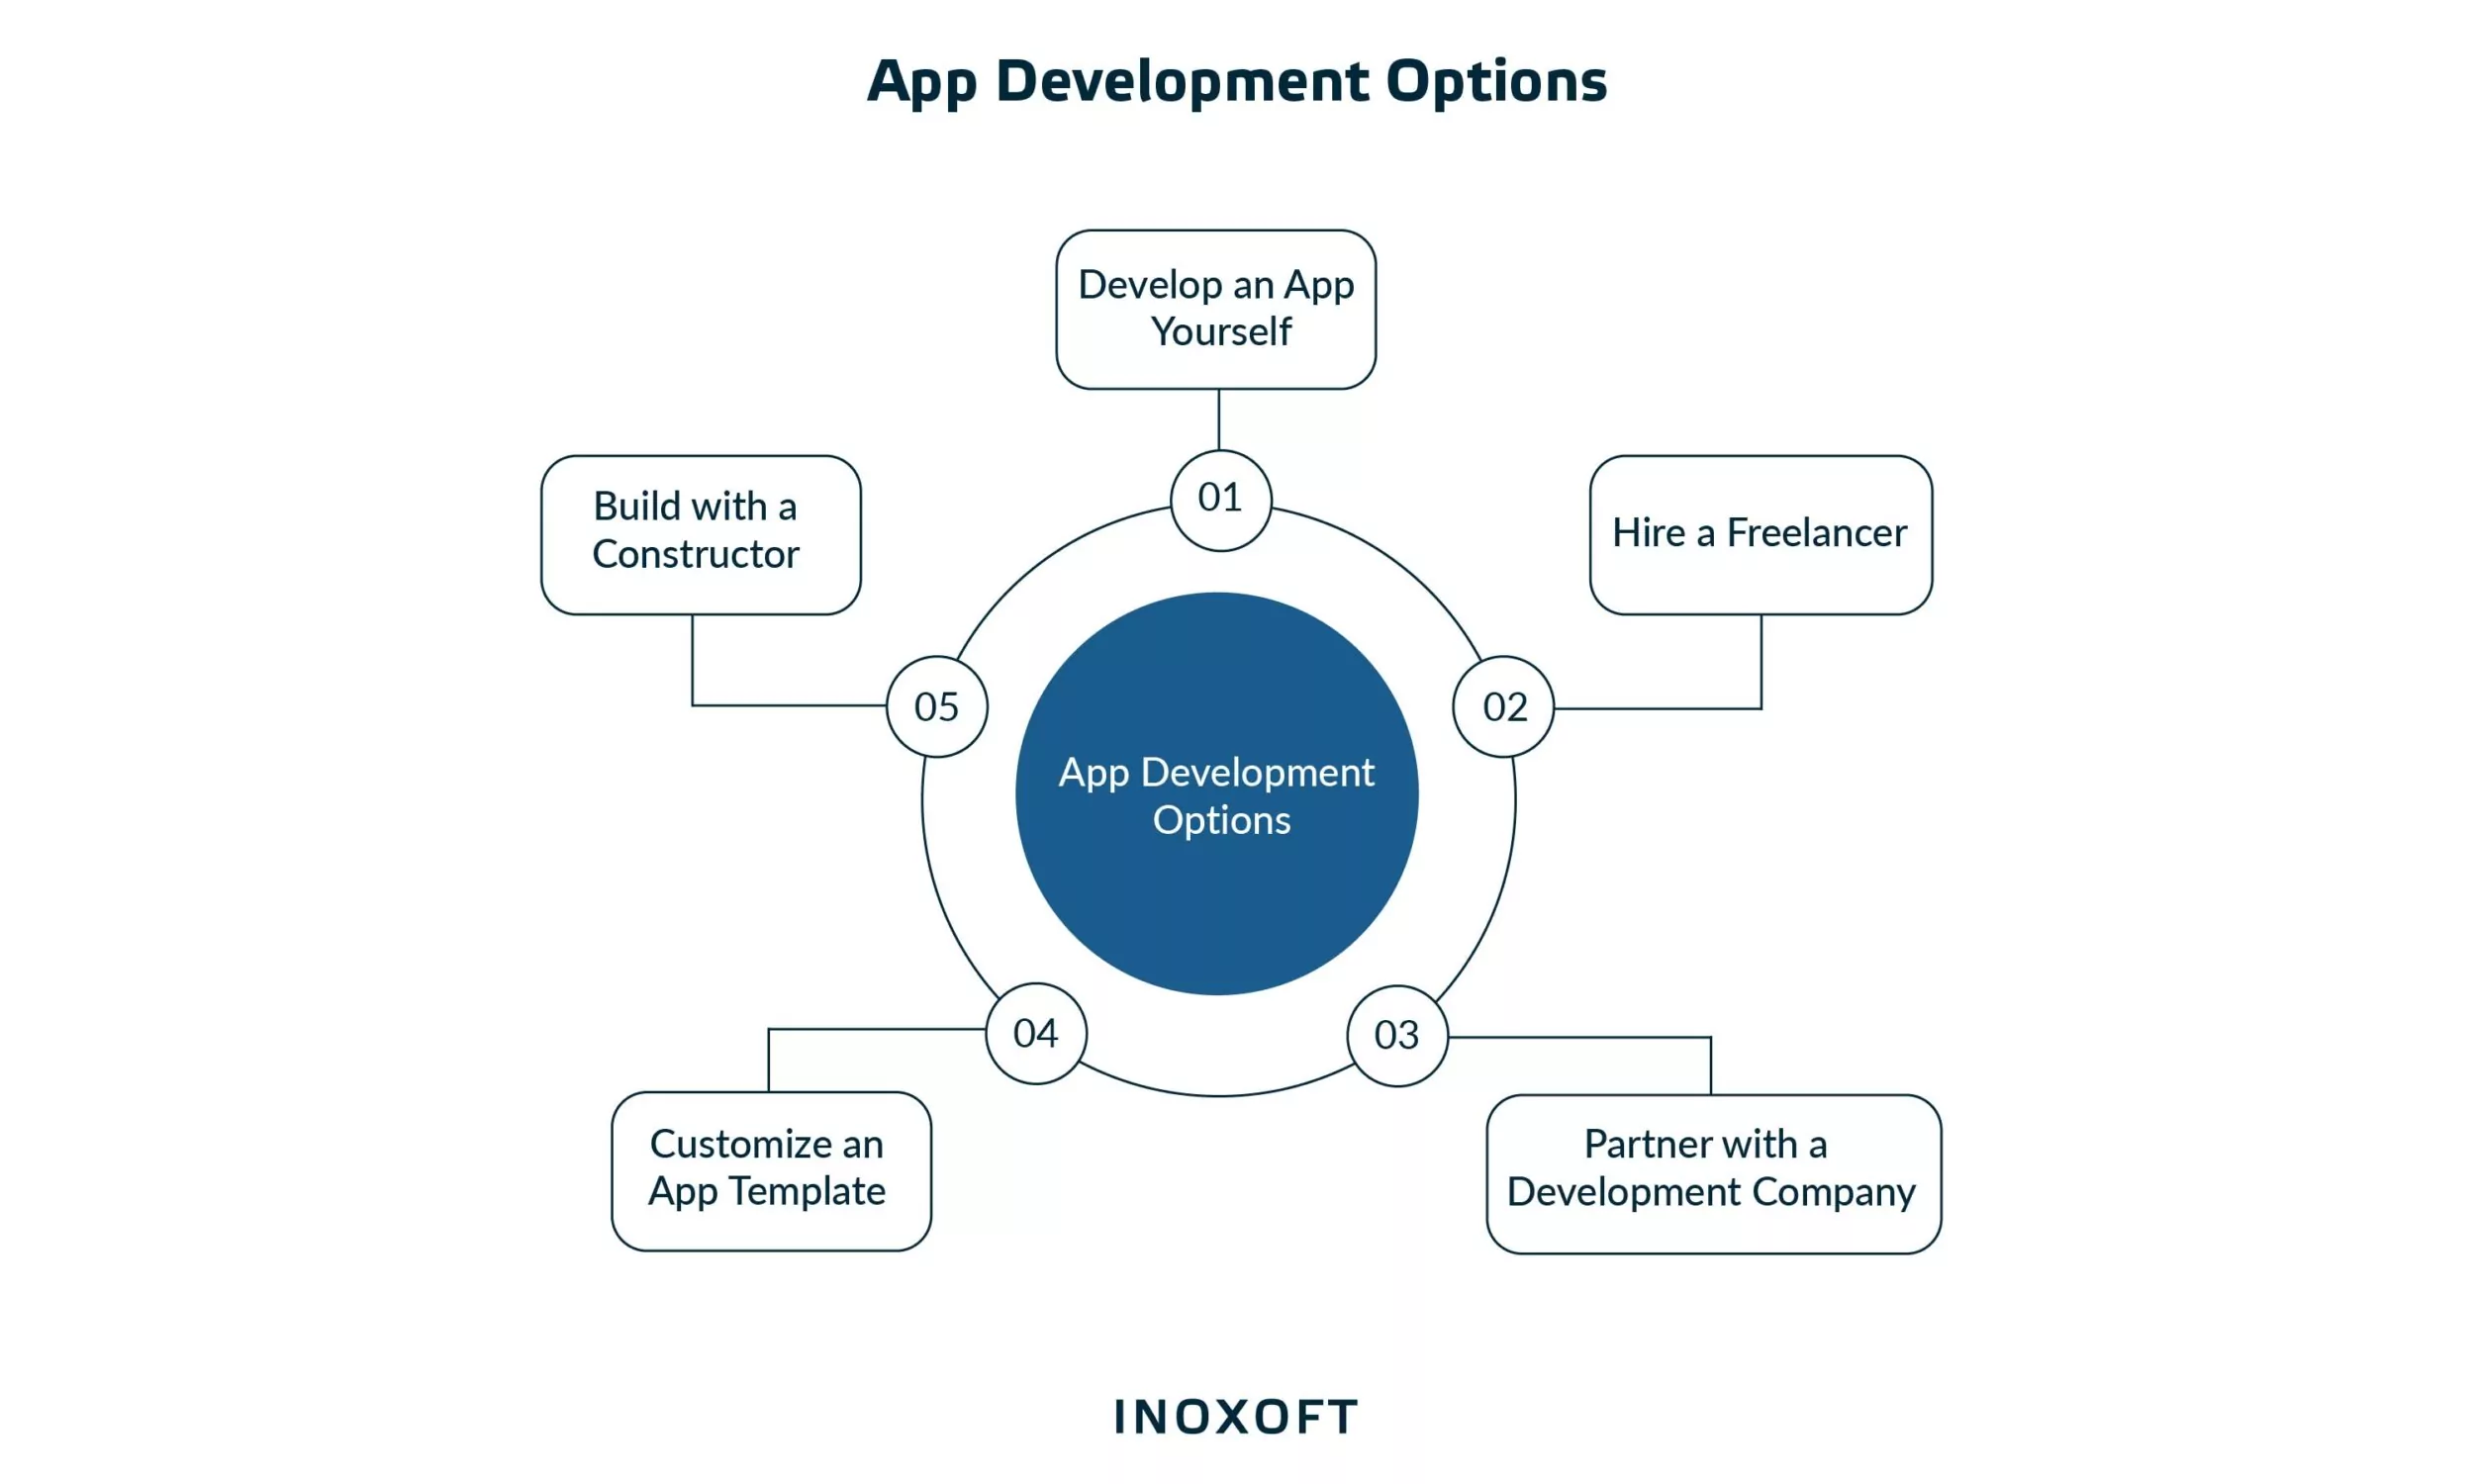 5 App Development Options